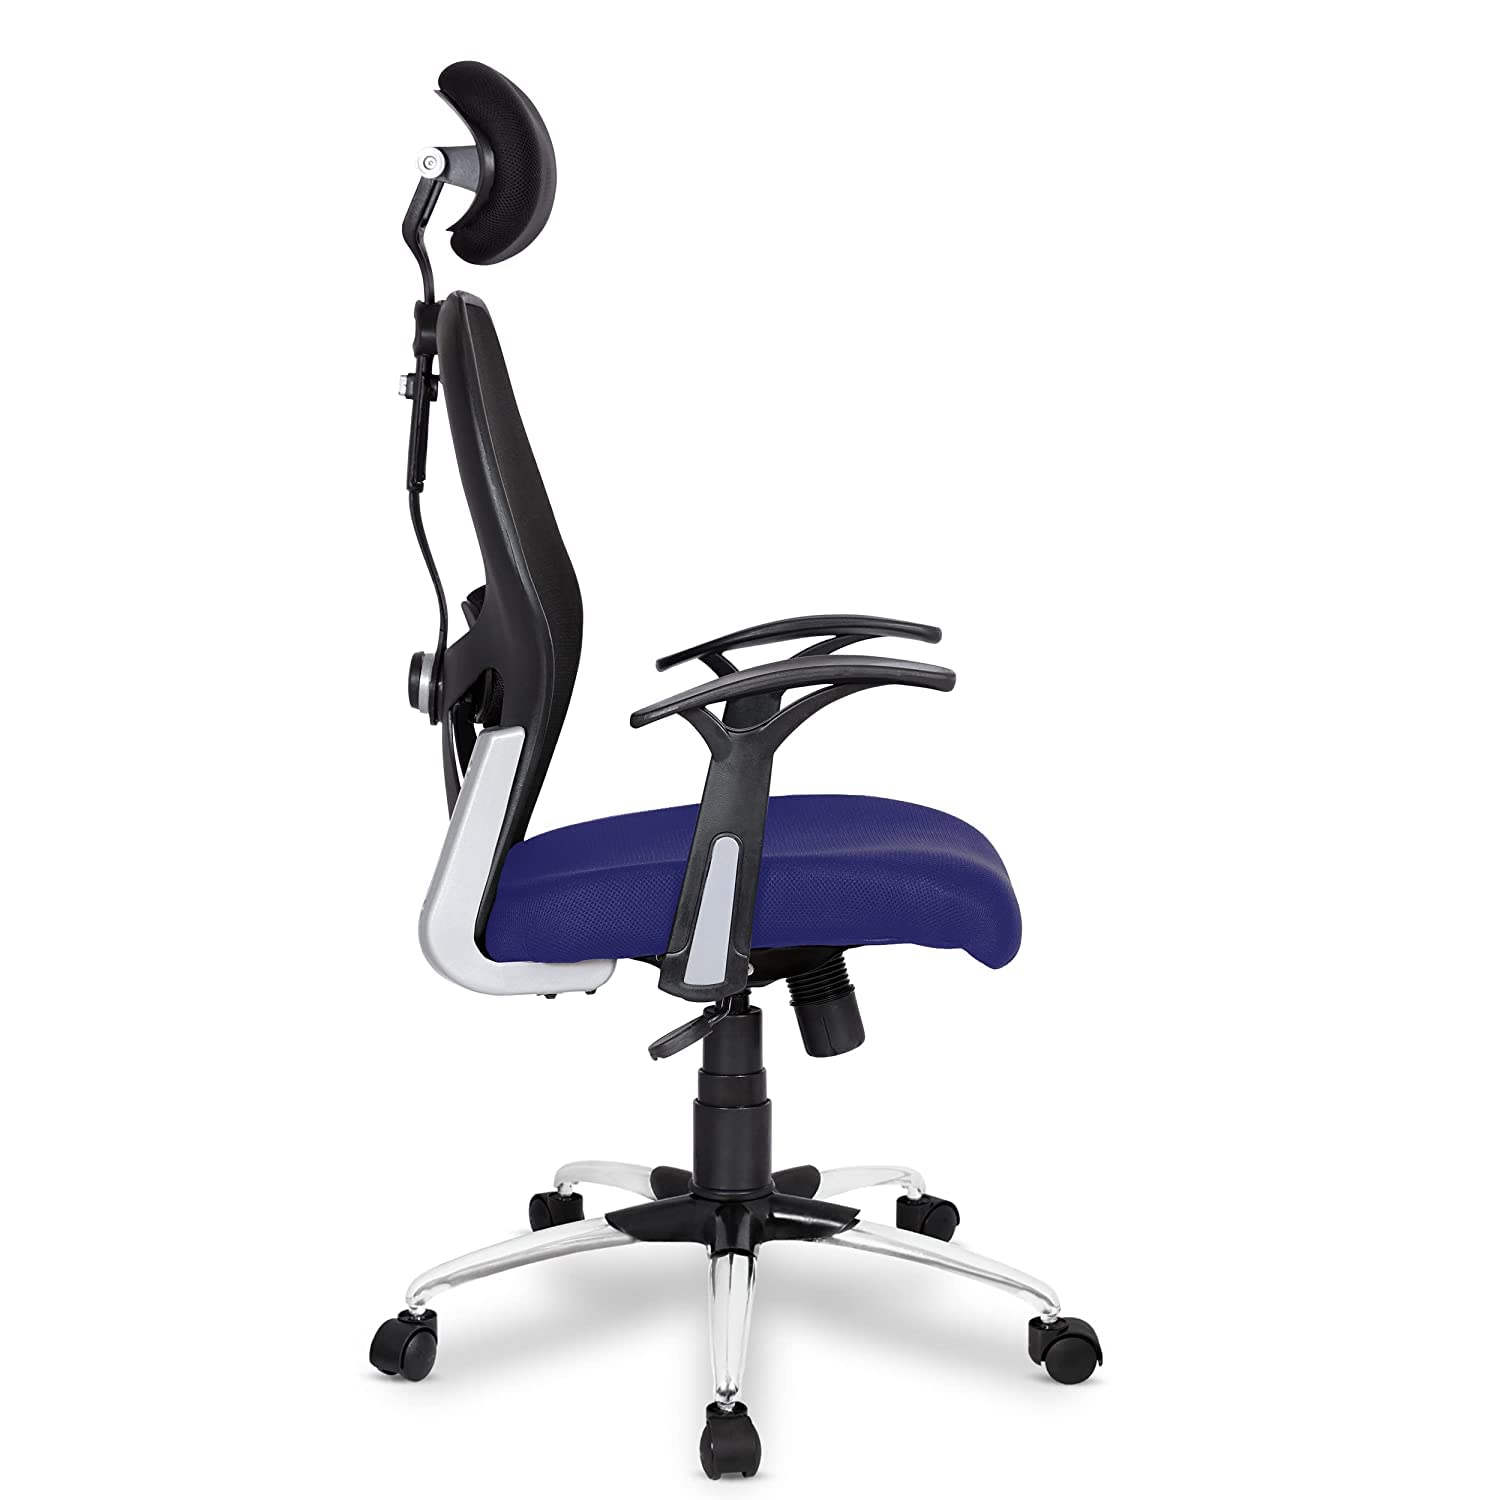 SAVYA HOME Apollo High Back Ergonomic Office Chair | Work from Home Chair | 2D Lumbar Support | Tilt Lock Mechanism | Ergonomic Meshback | Blue, Qty-2